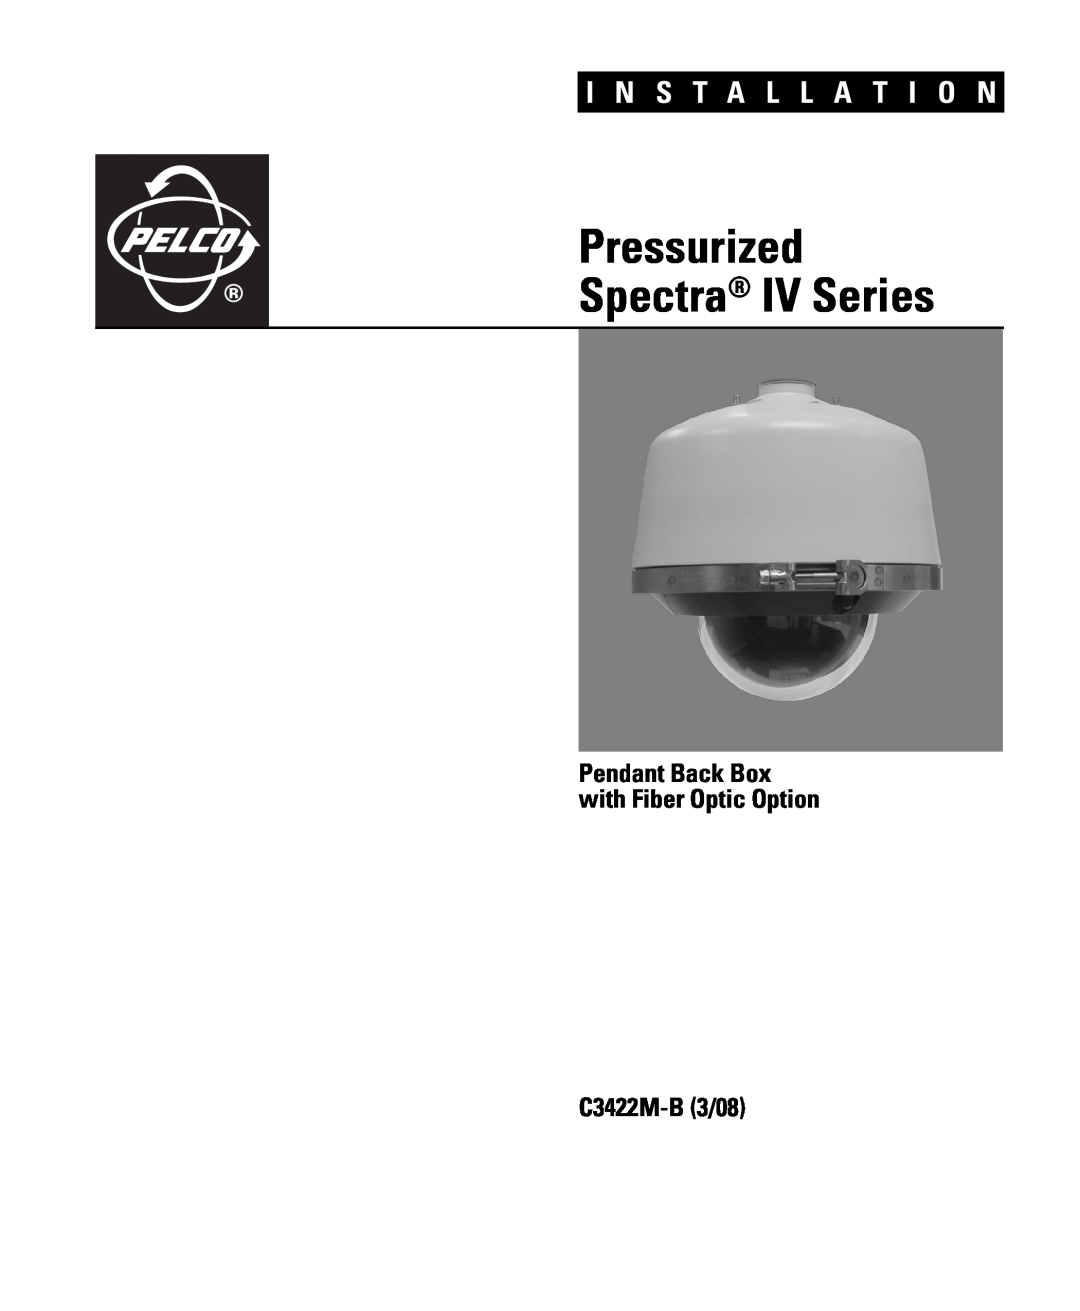 Pelco C3422M-B manual Pendant Back Box with Fiber Optic Option, Pressurized Spectra IV Series, I N S T A L L A T I O N 